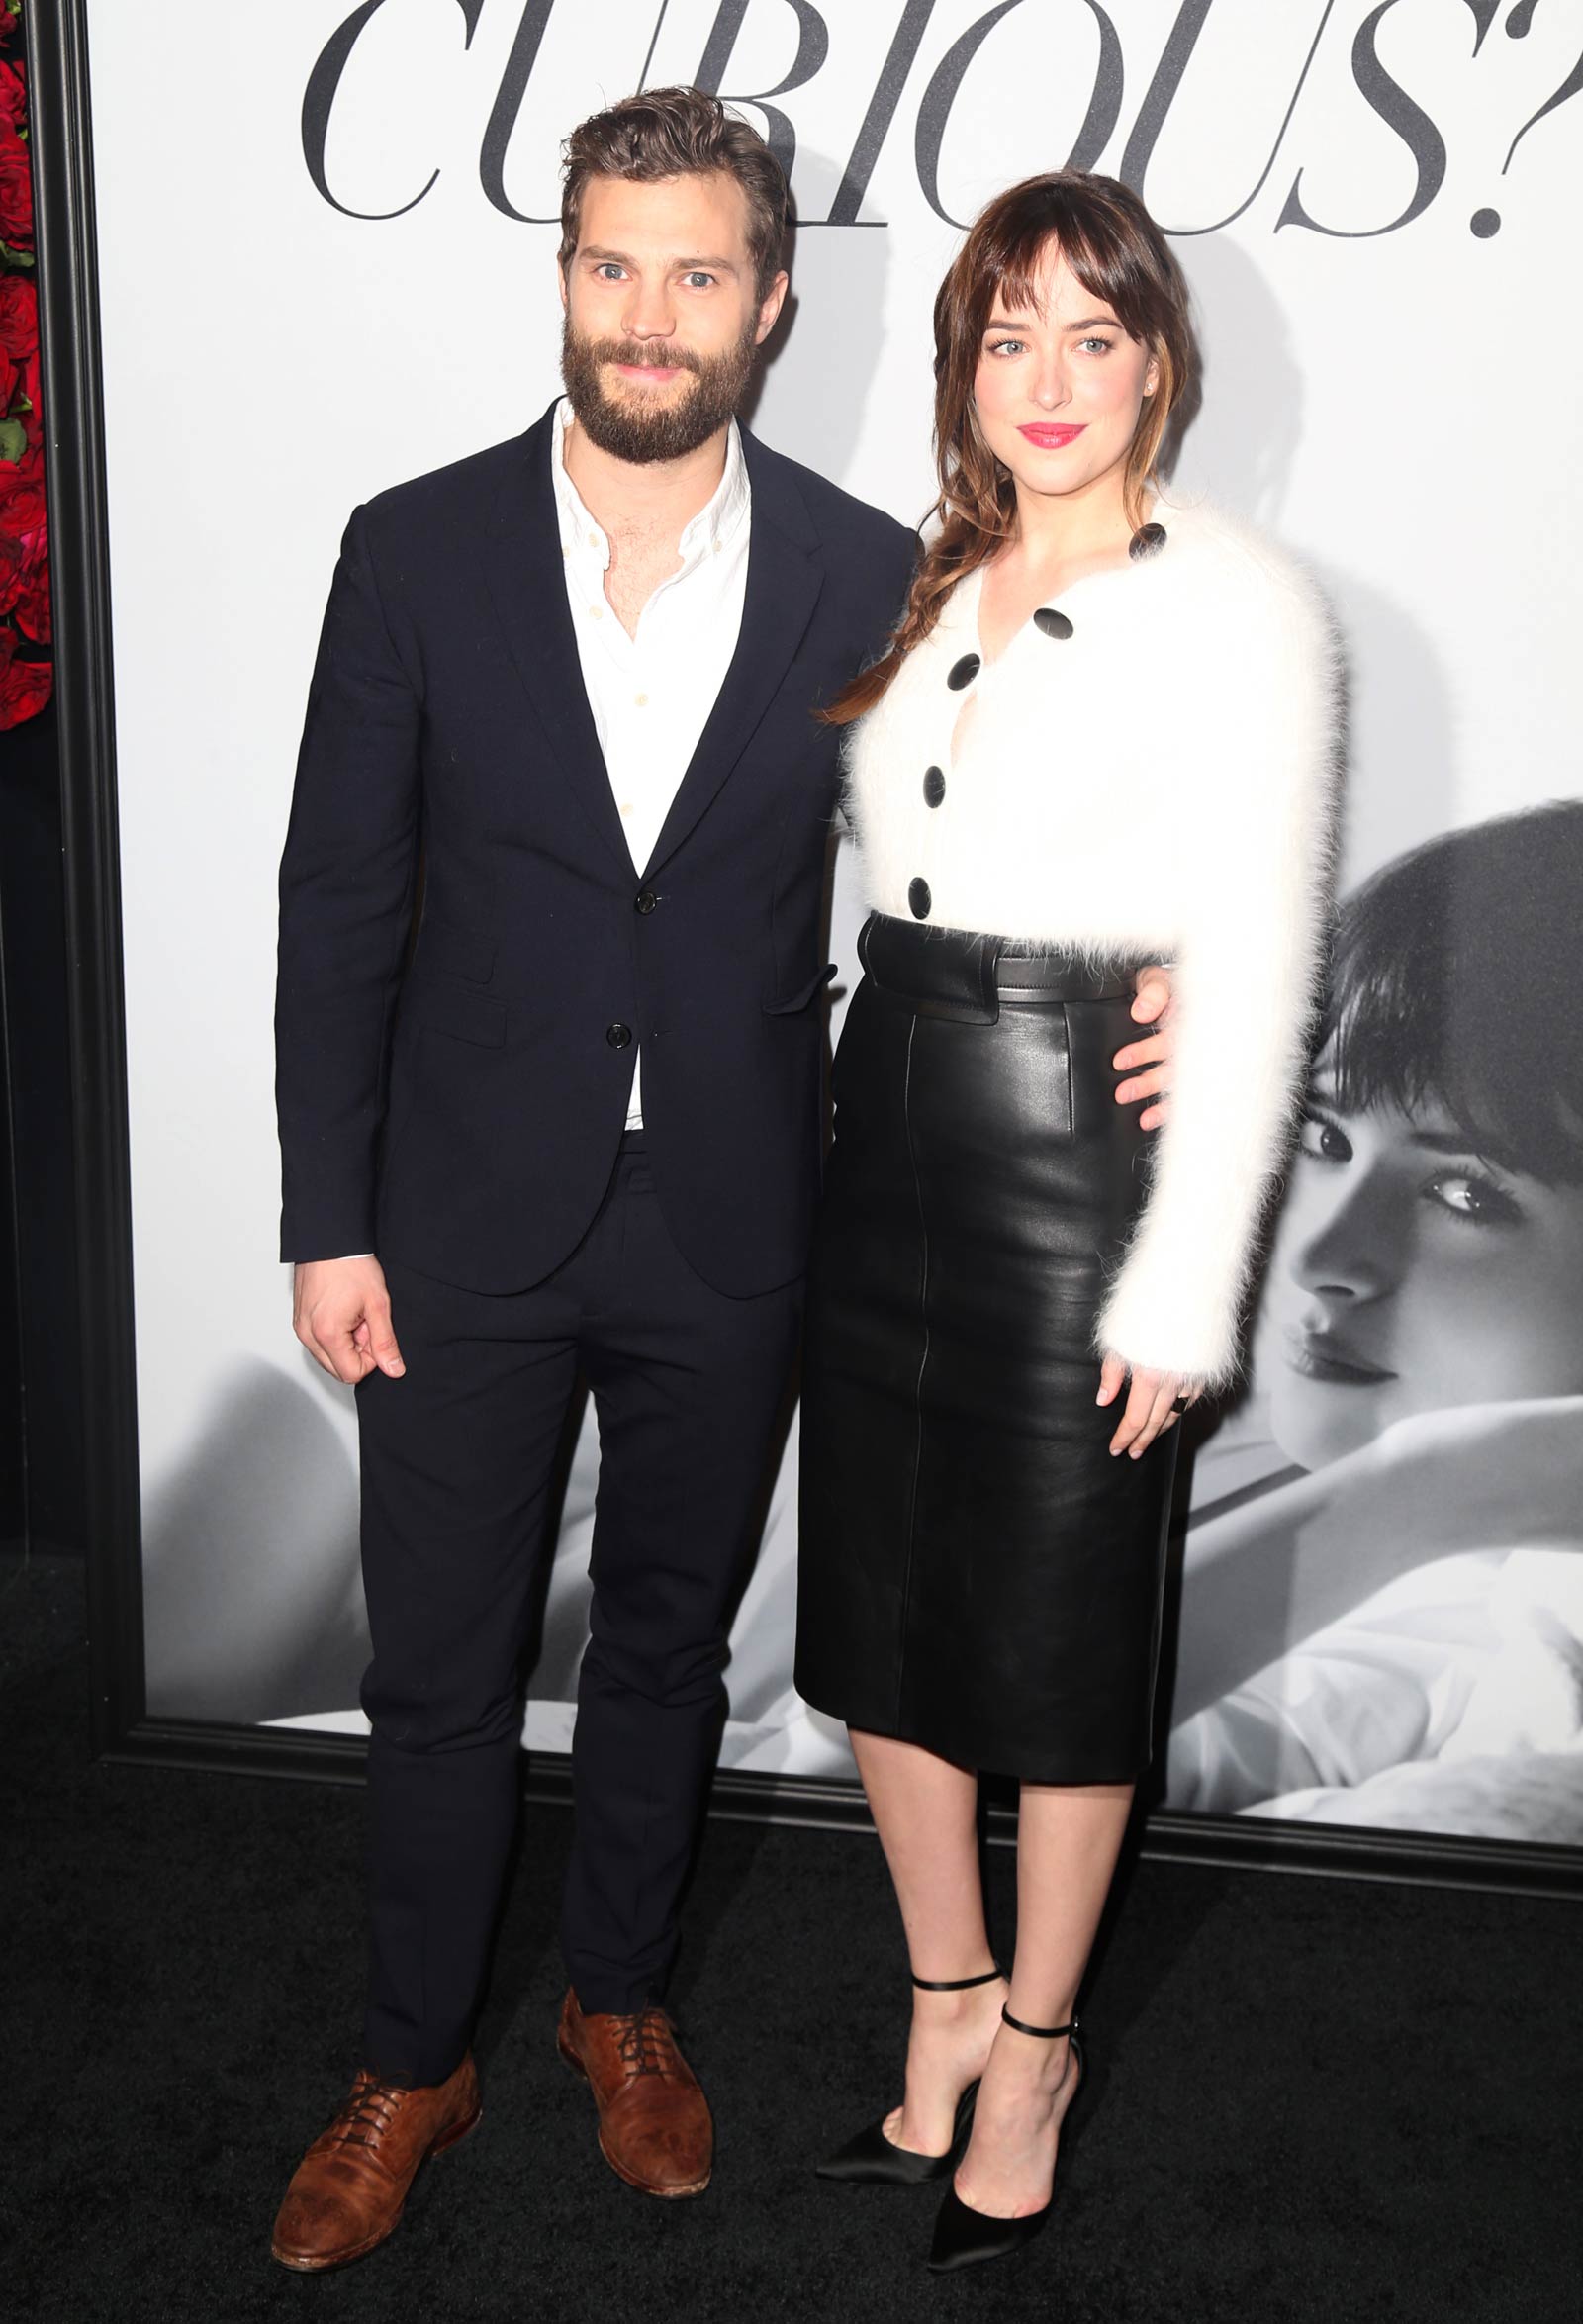 Dakota Johnson attends the Fifty Shades Of Grey screening